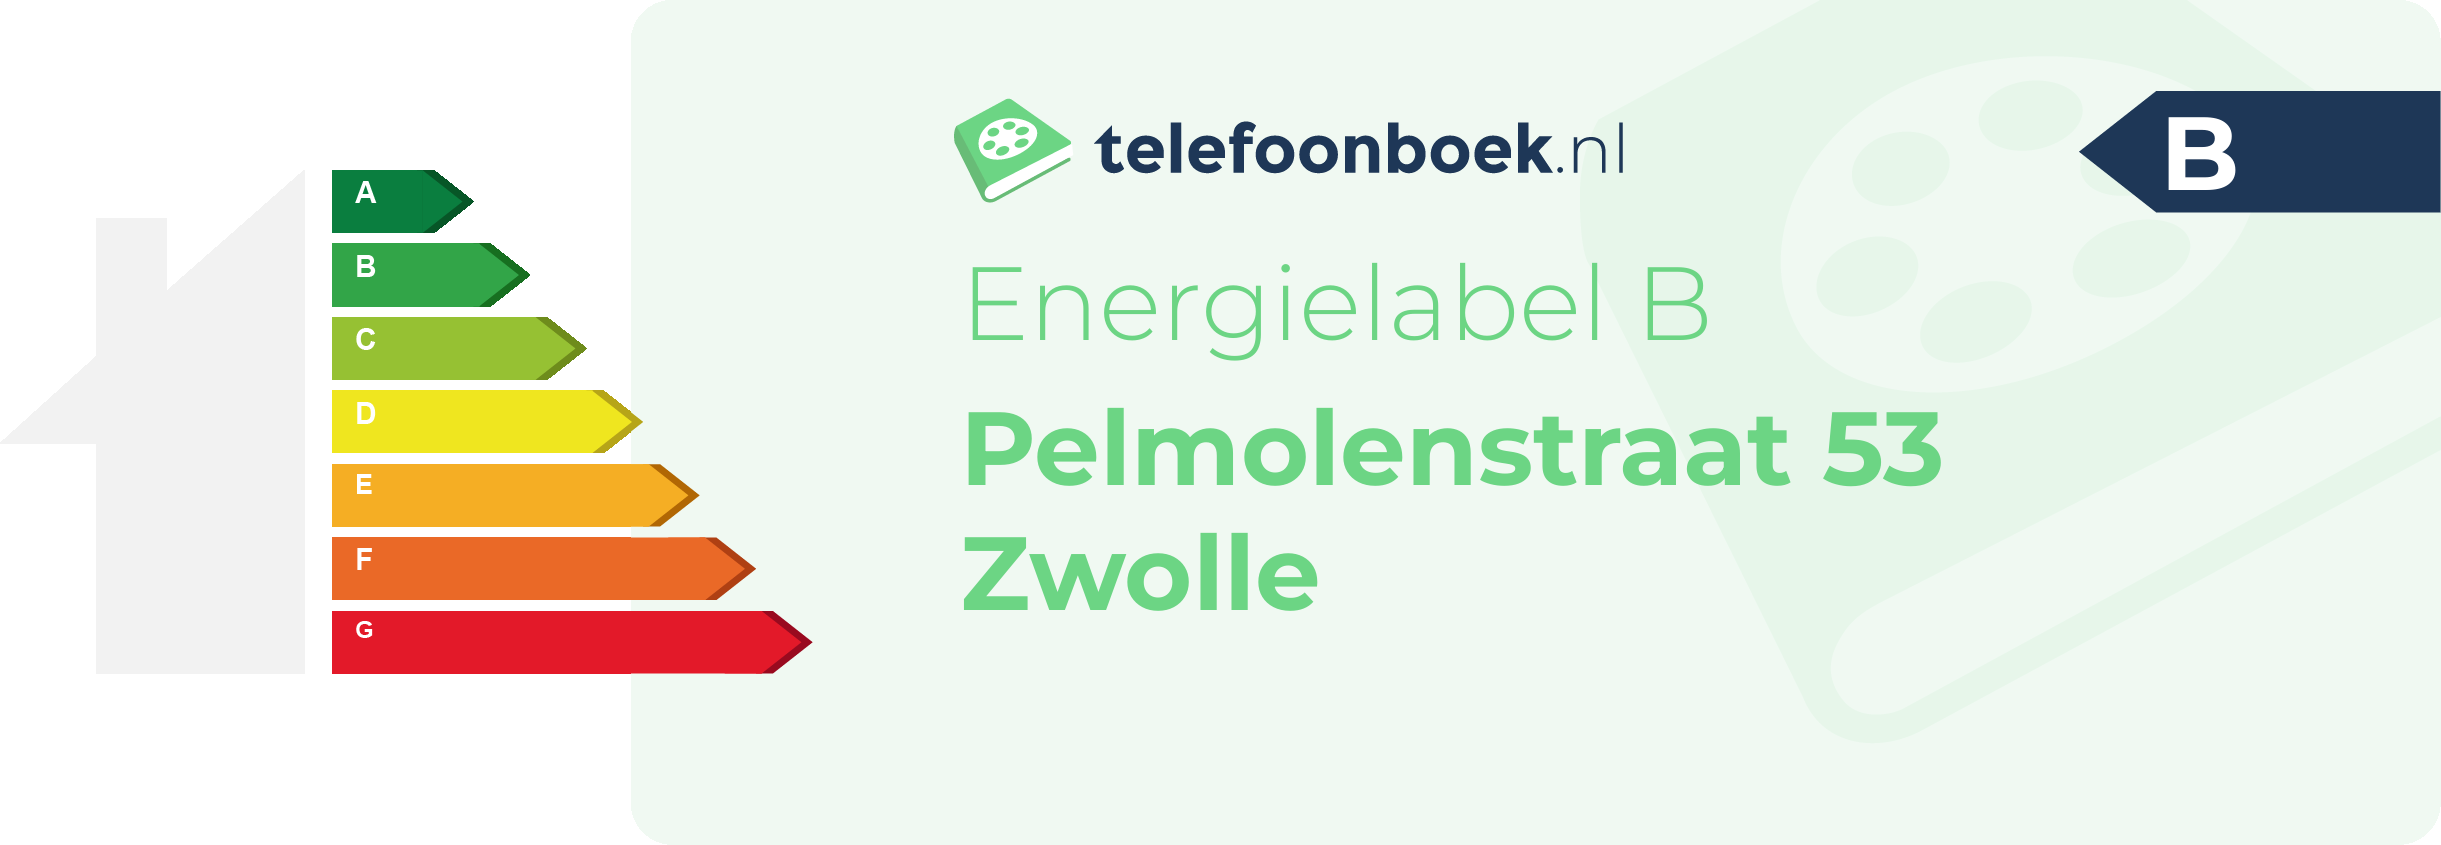 Energielabel Pelmolenstraat 53 Zwolle